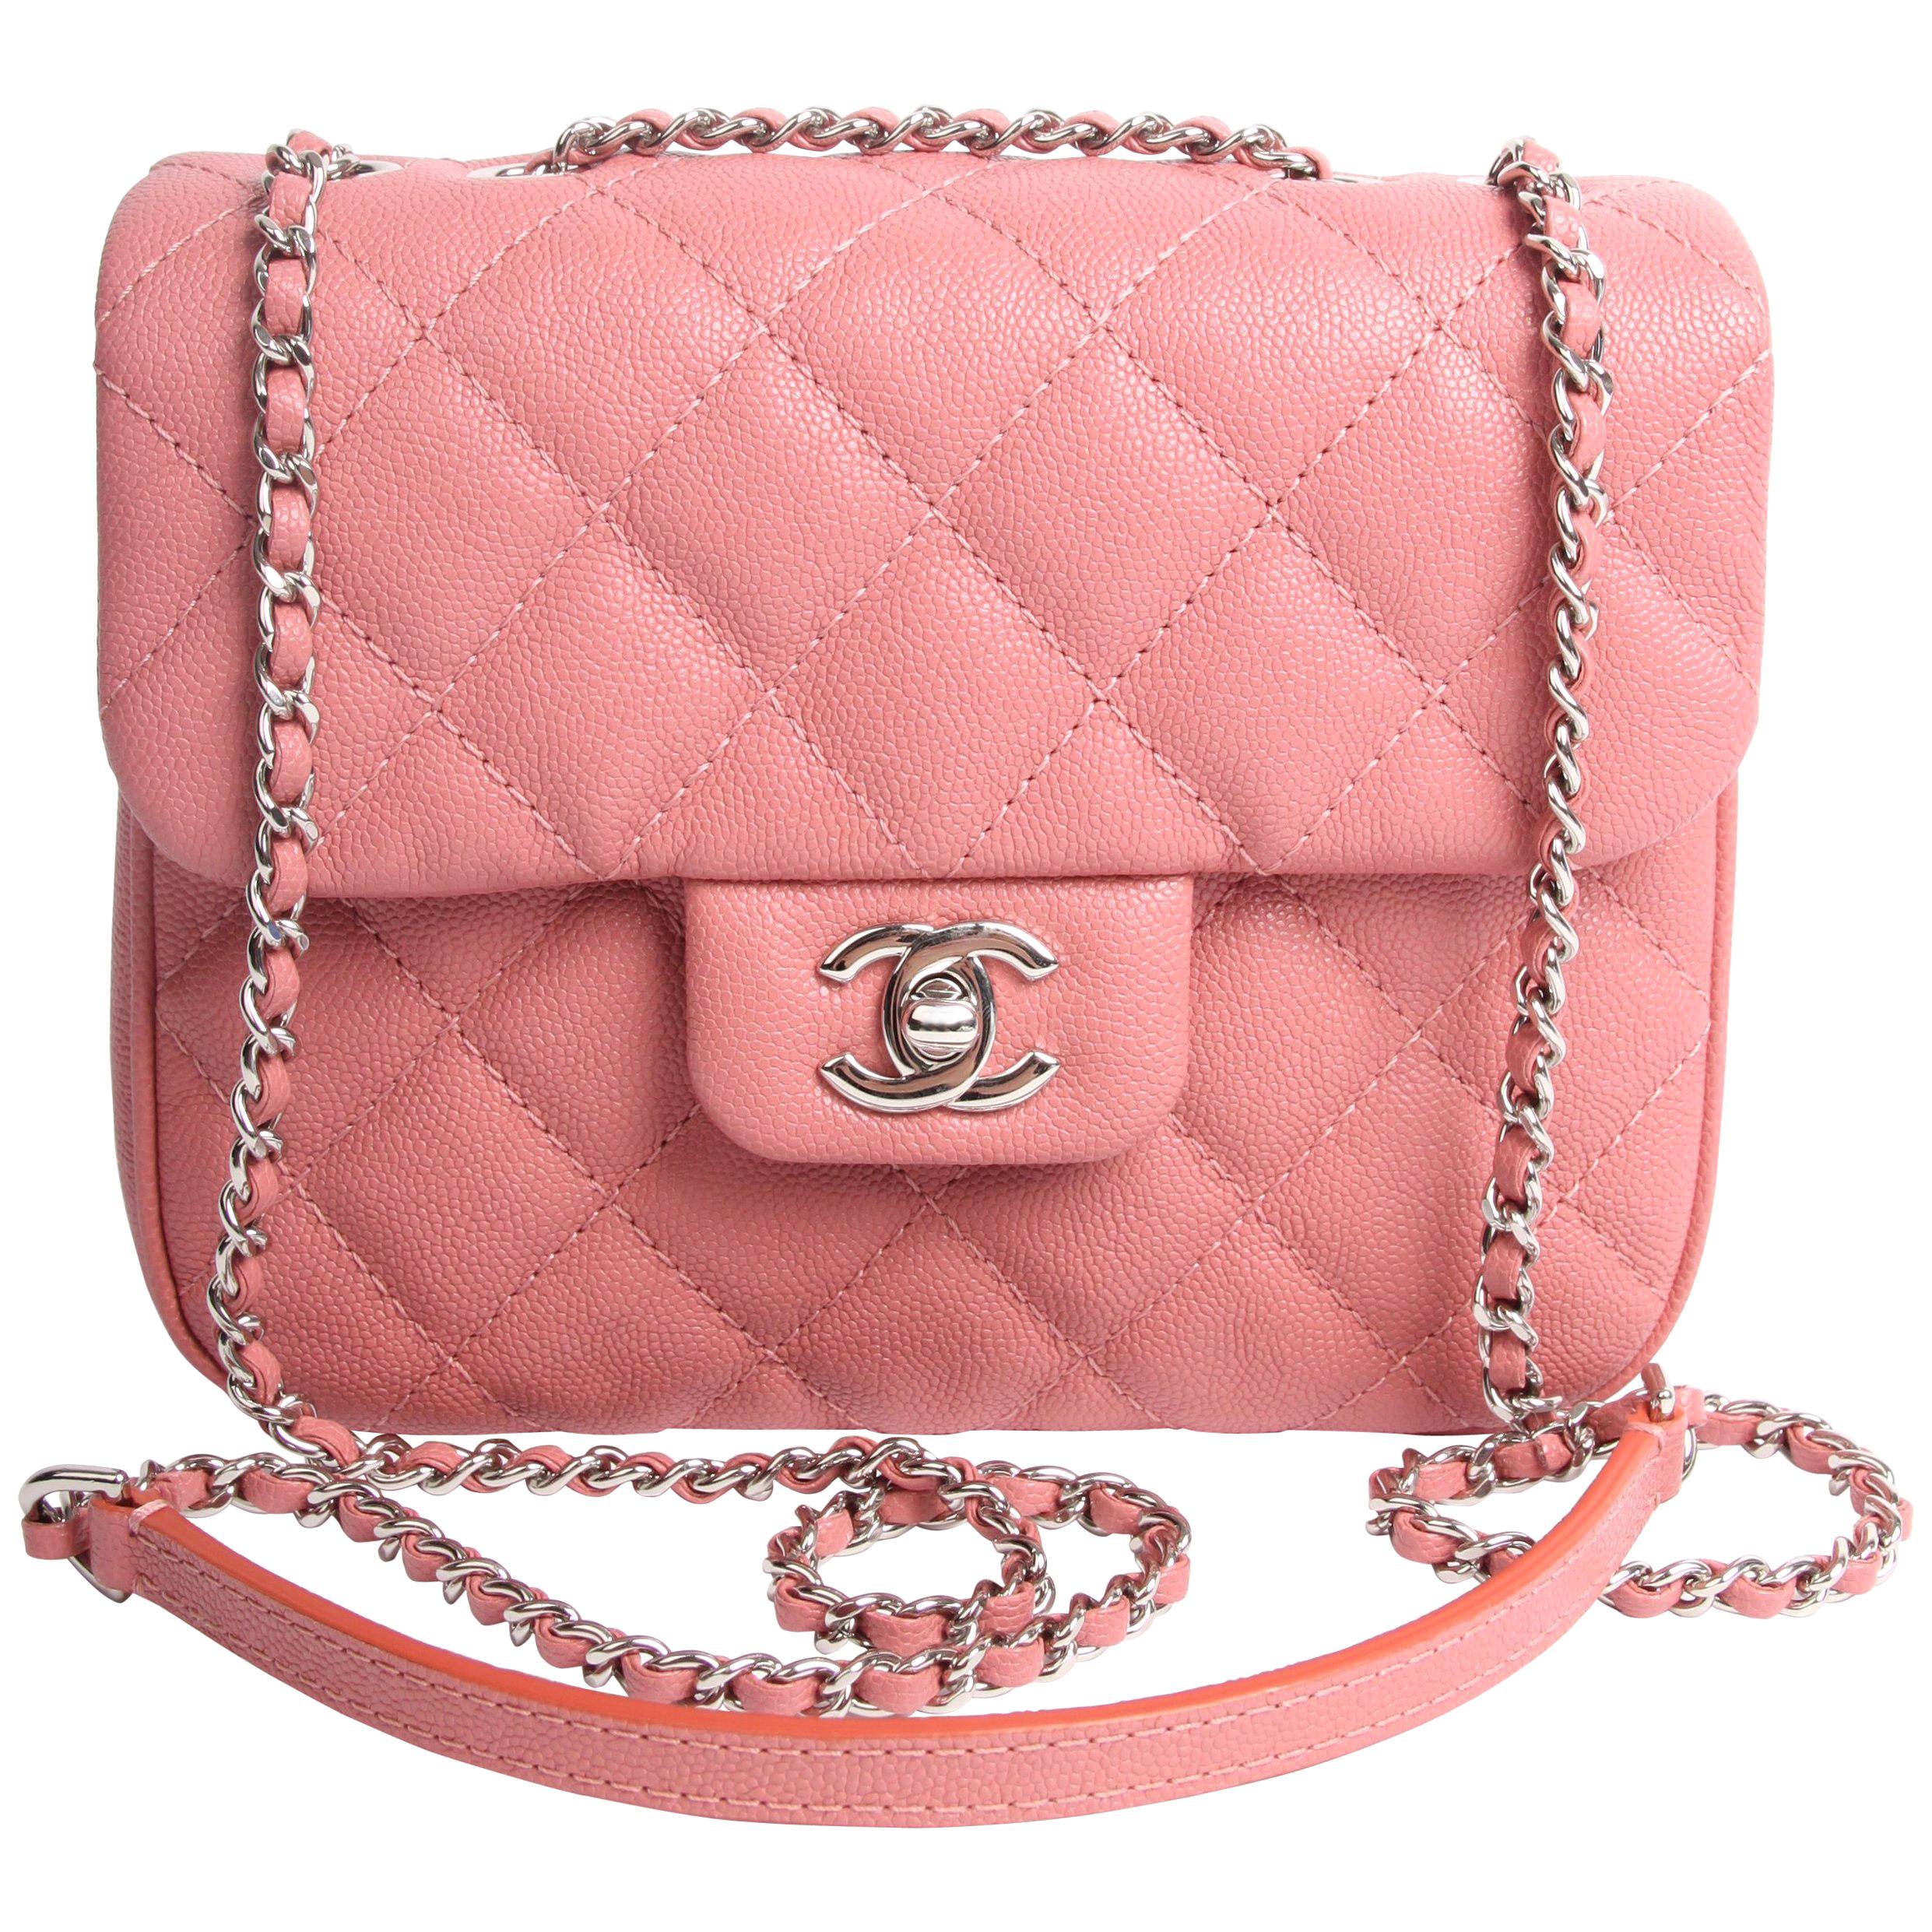 Chanel Urban Companion Bag - dusty pink